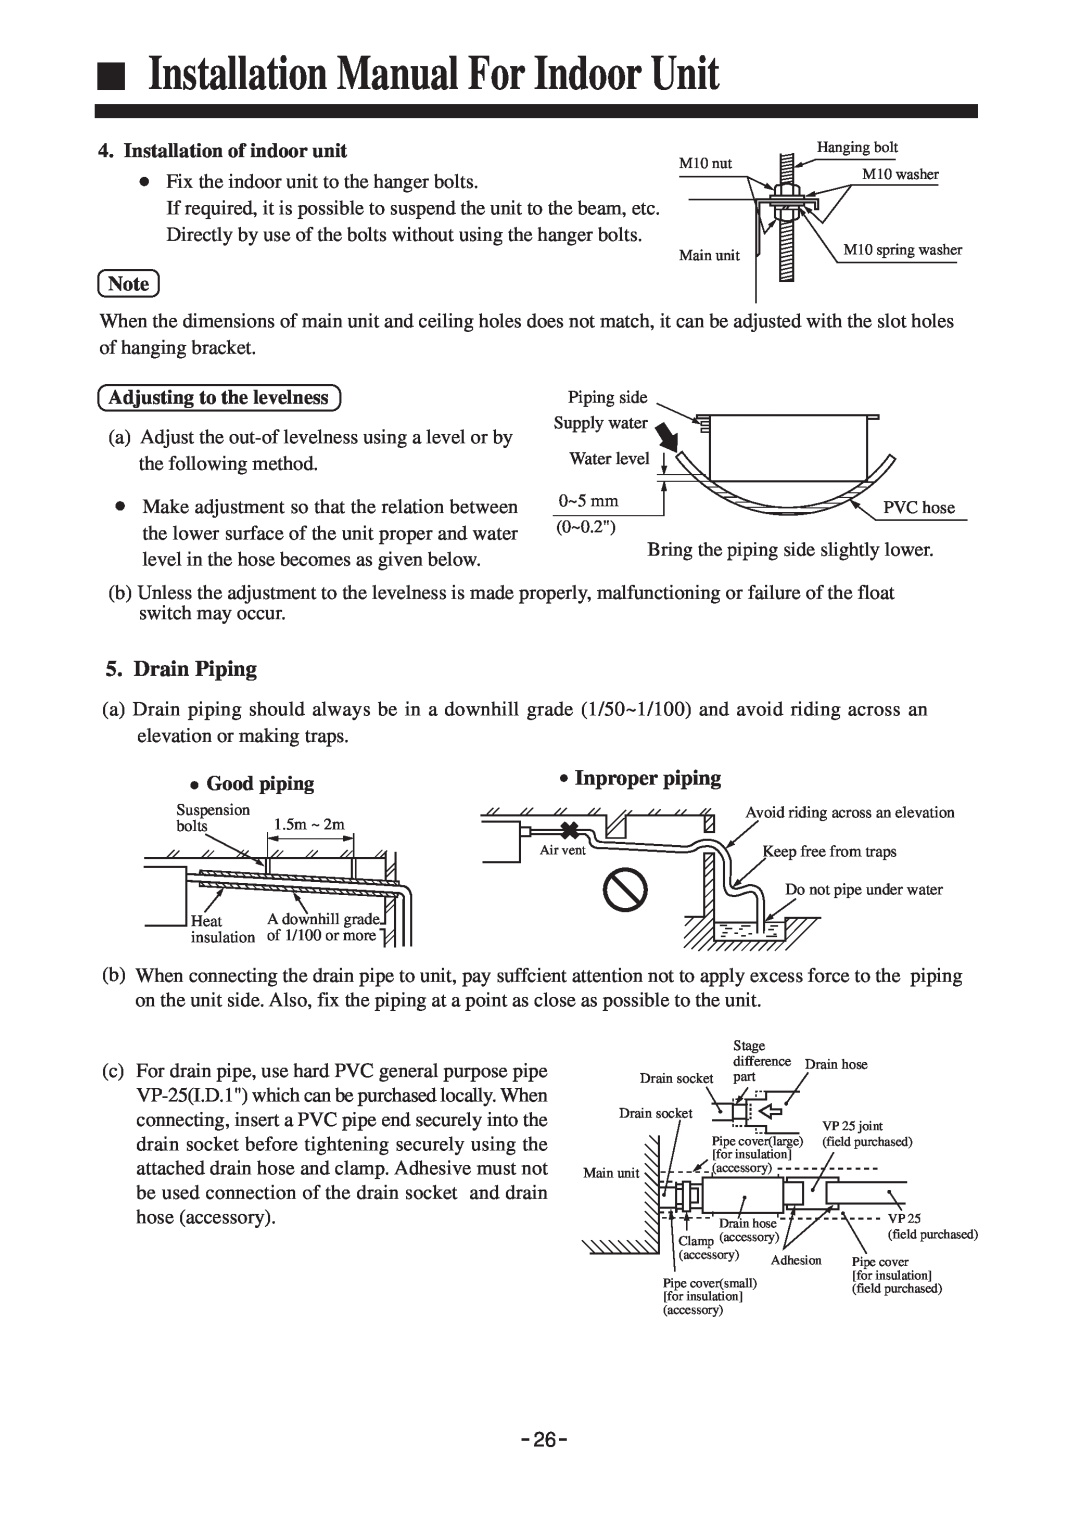 Haier HDU-42CF03/H installation manual Installation Manual For Indoor Unit, Drain Piping, Inproper piping 